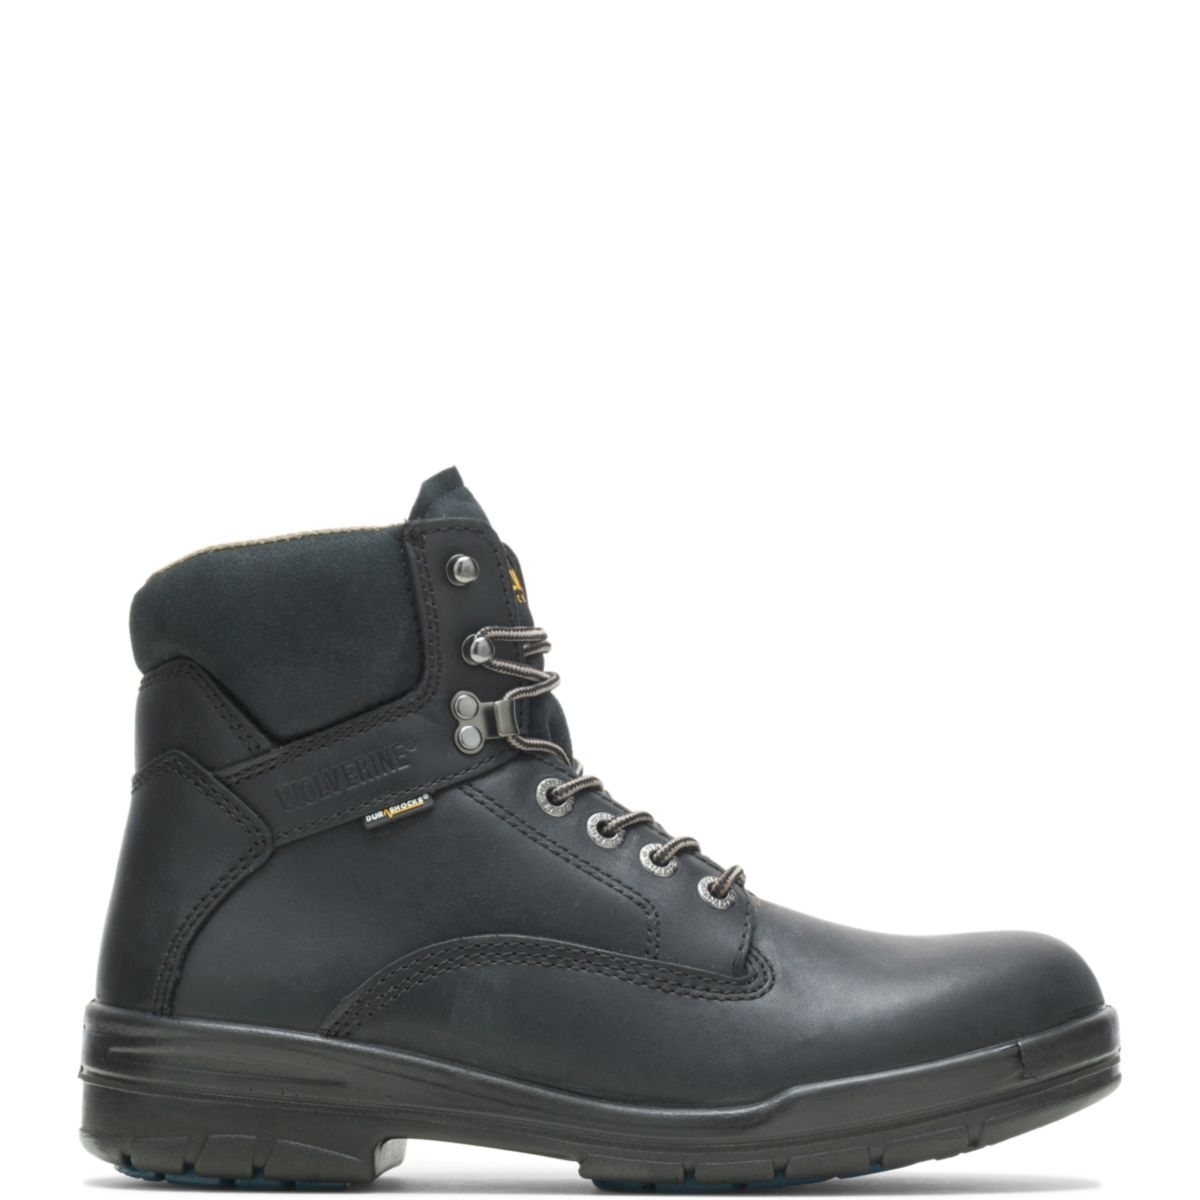 WOLVERINE Men's 6 DuraShocksÂ® Slip Resistant Direct-Attached Lined Soft Toe Work Boot Black - W03123 14 WIDE BLACK - BLACK, 7.5 Wide